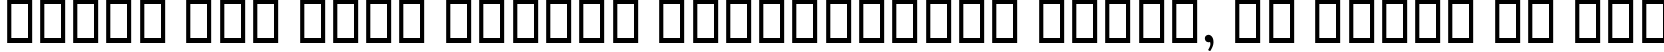 Пример написания шрифтом B Baran Italic текста на русском